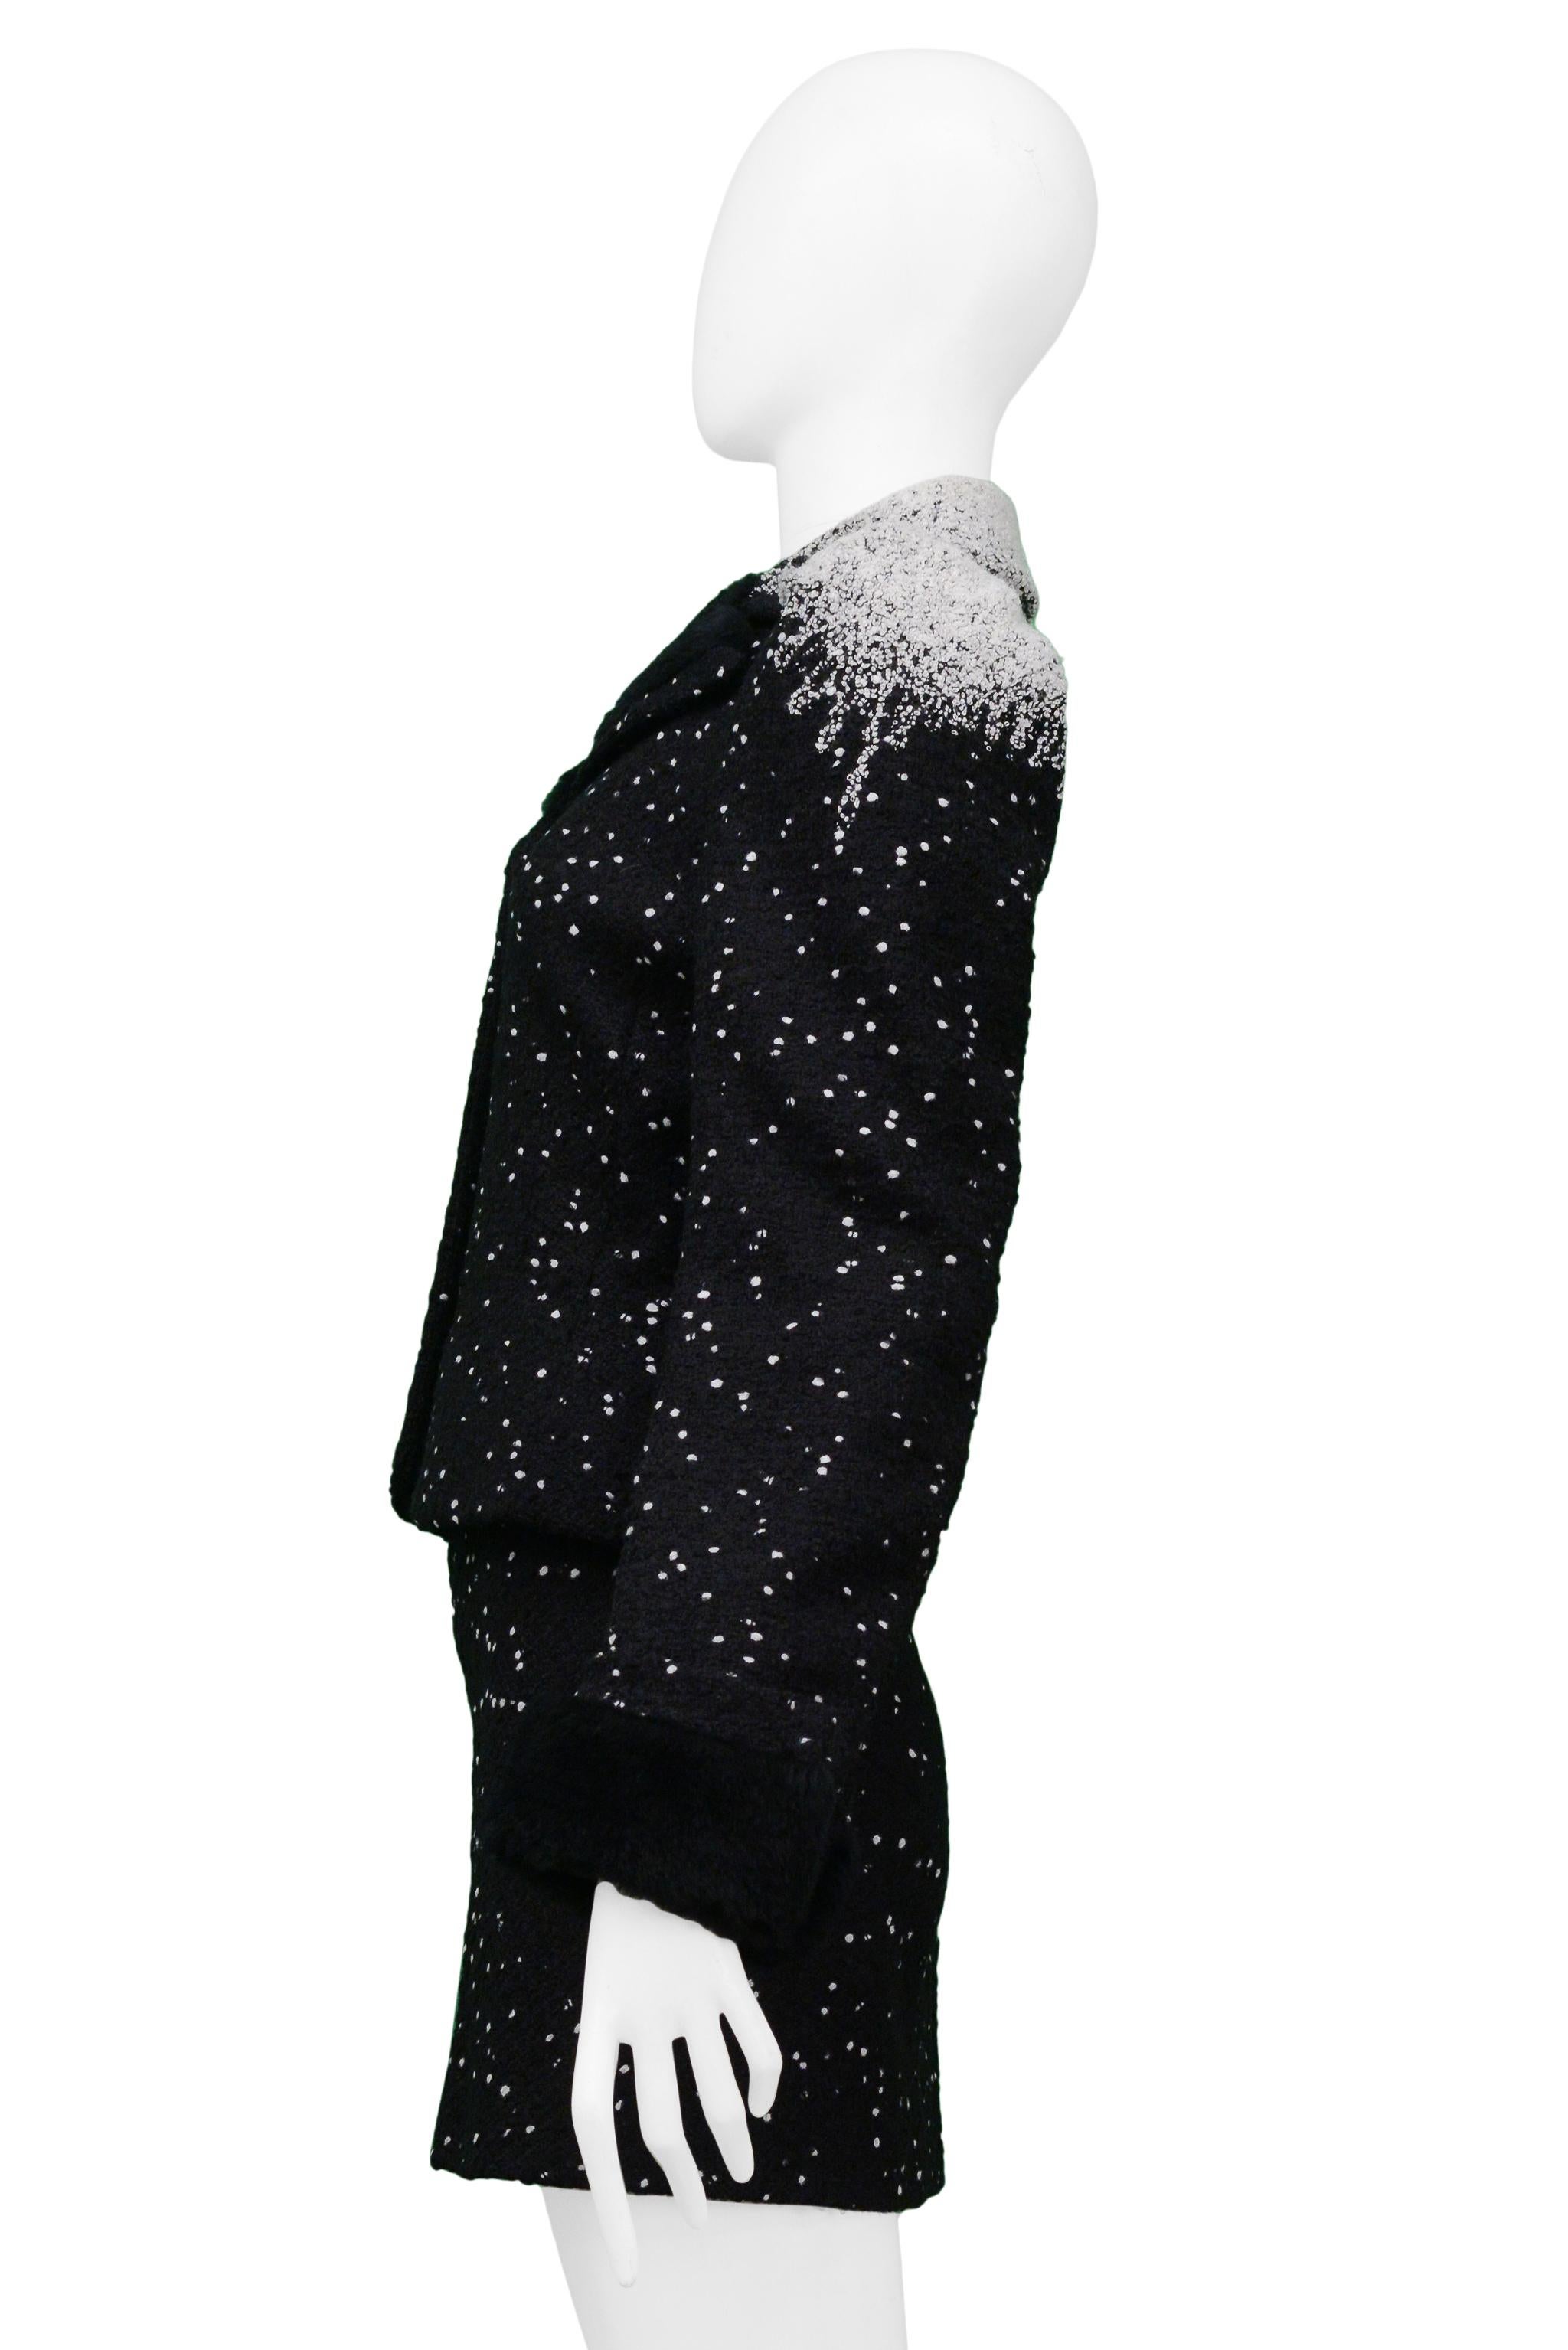 John Galliano Black & White Snowstorm Stitch Jacket And Skirt 1996 1